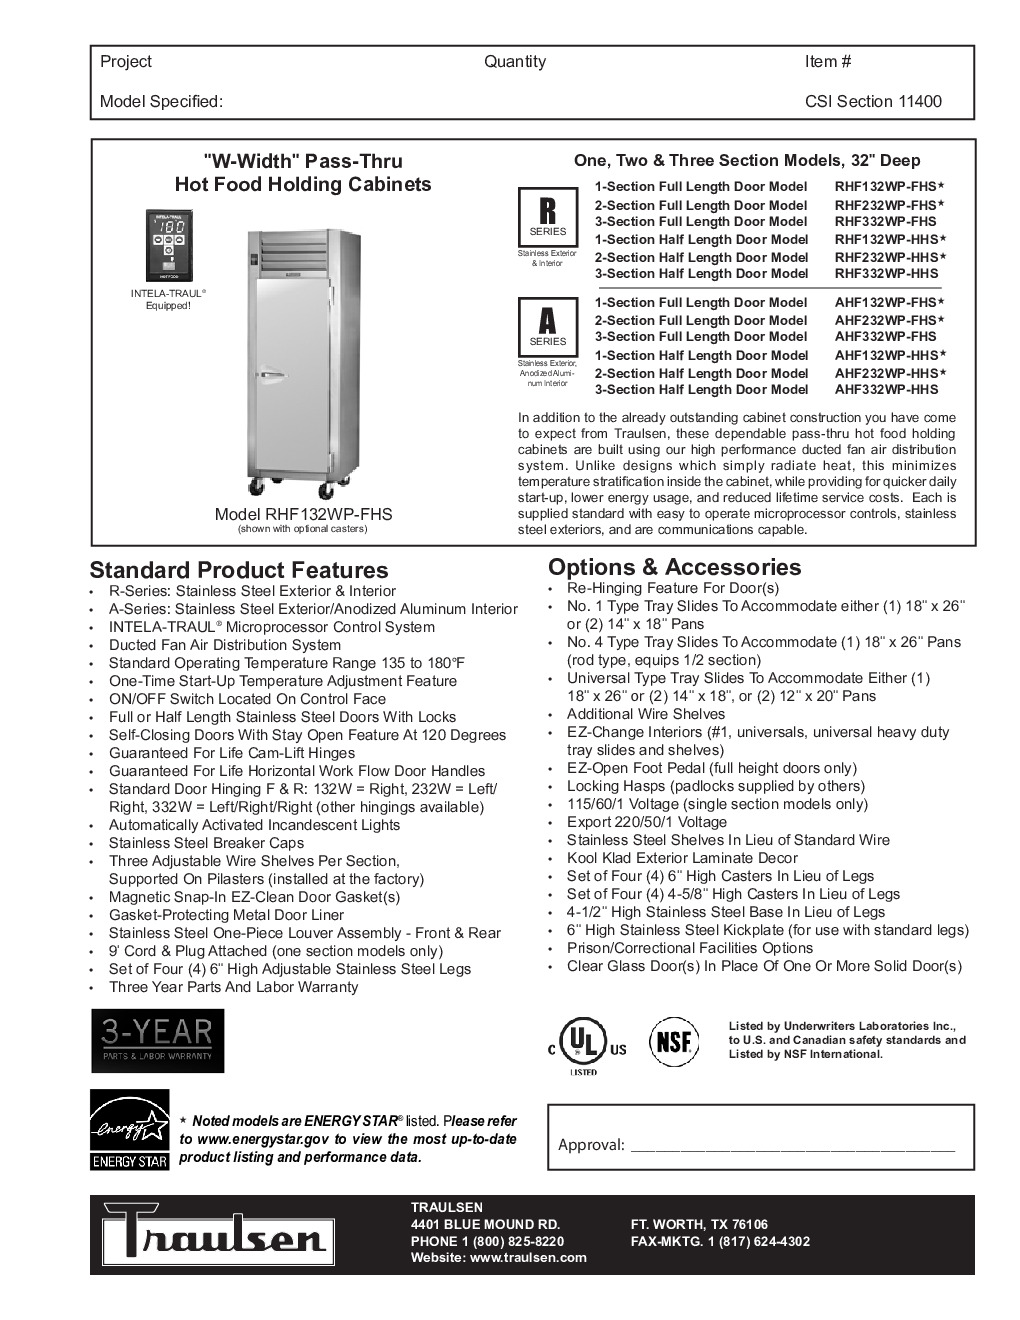 Traulsen RHF232WP-HHG Pass-Thru Heated Cabinet